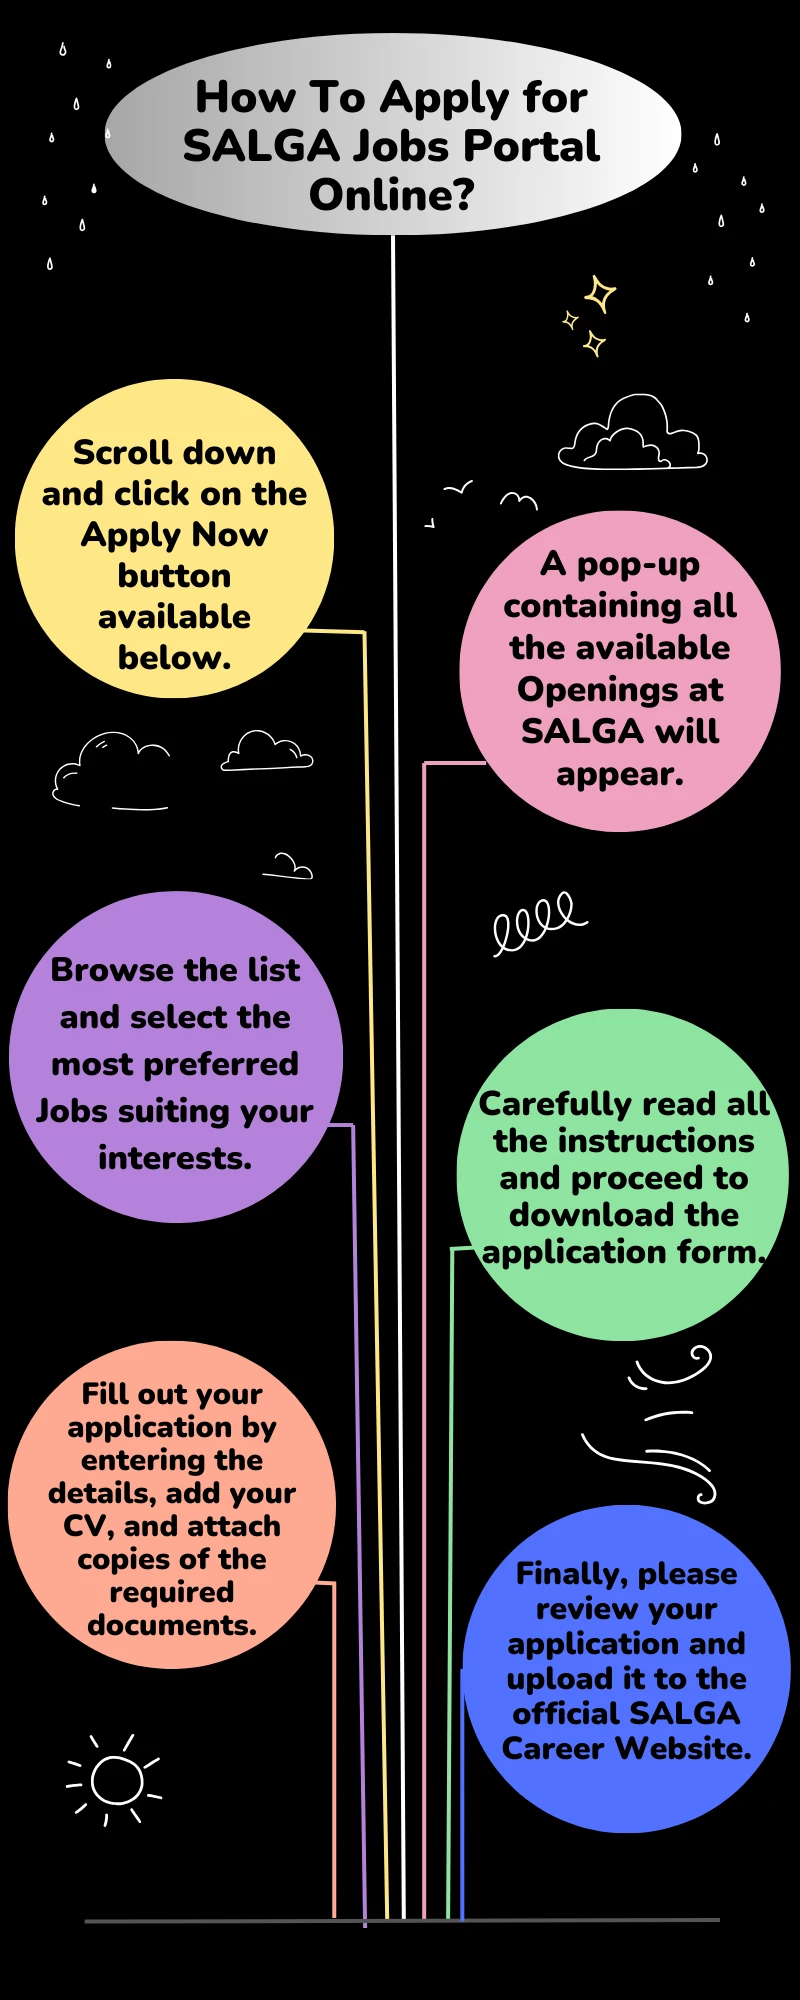 How To Apply for SALGA Jobs Portal Online?